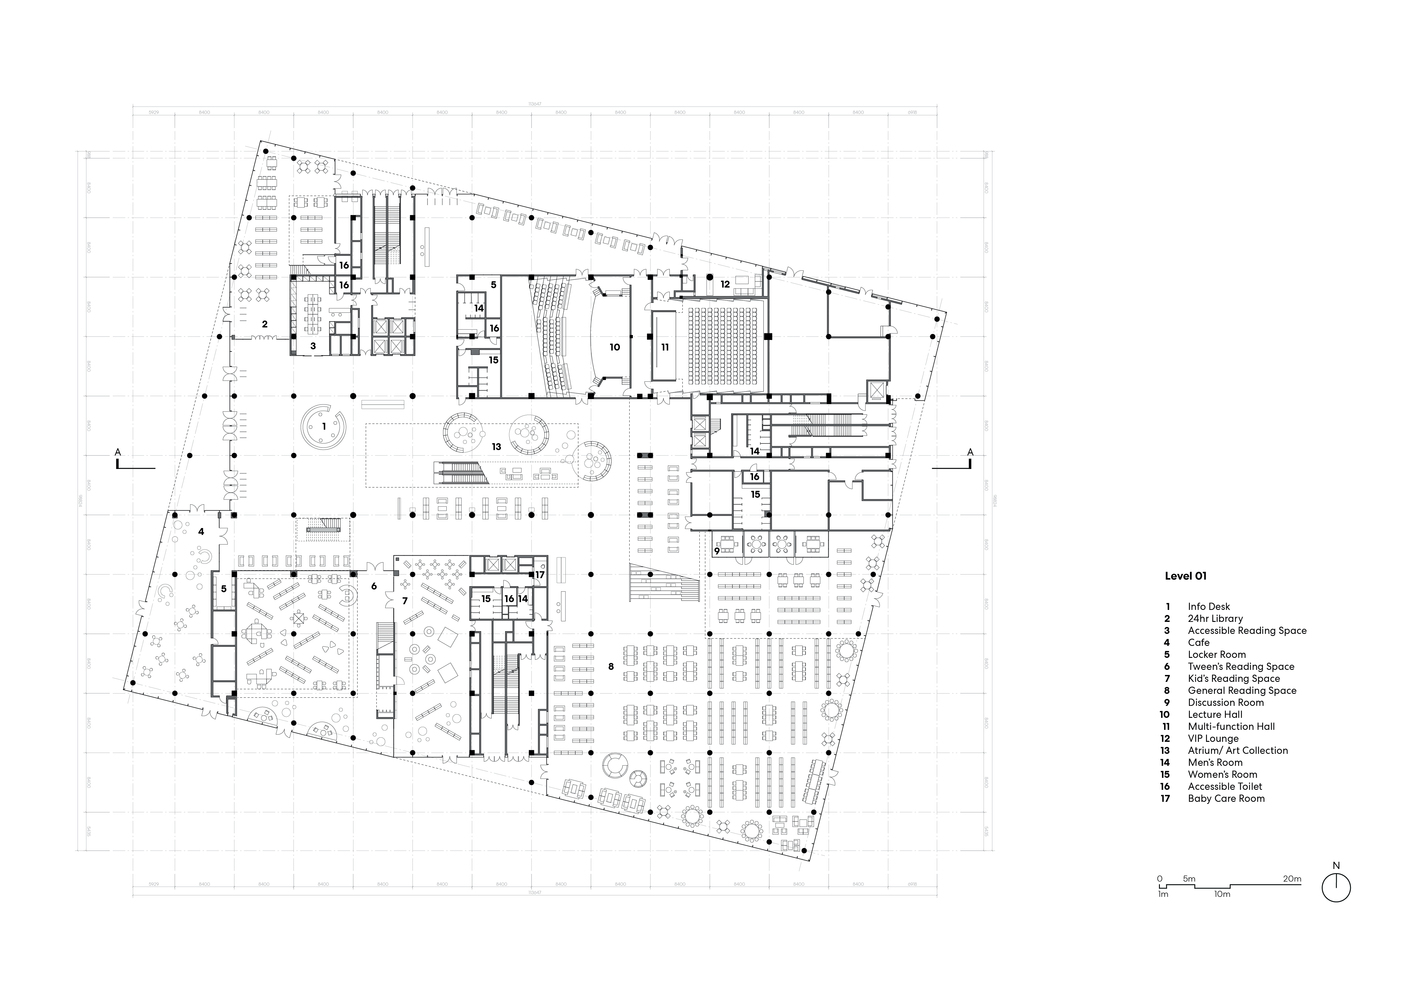 Schmidt_Hammer_Lassen_Architects_Ningbo_New_Library_Plans-01.jpg